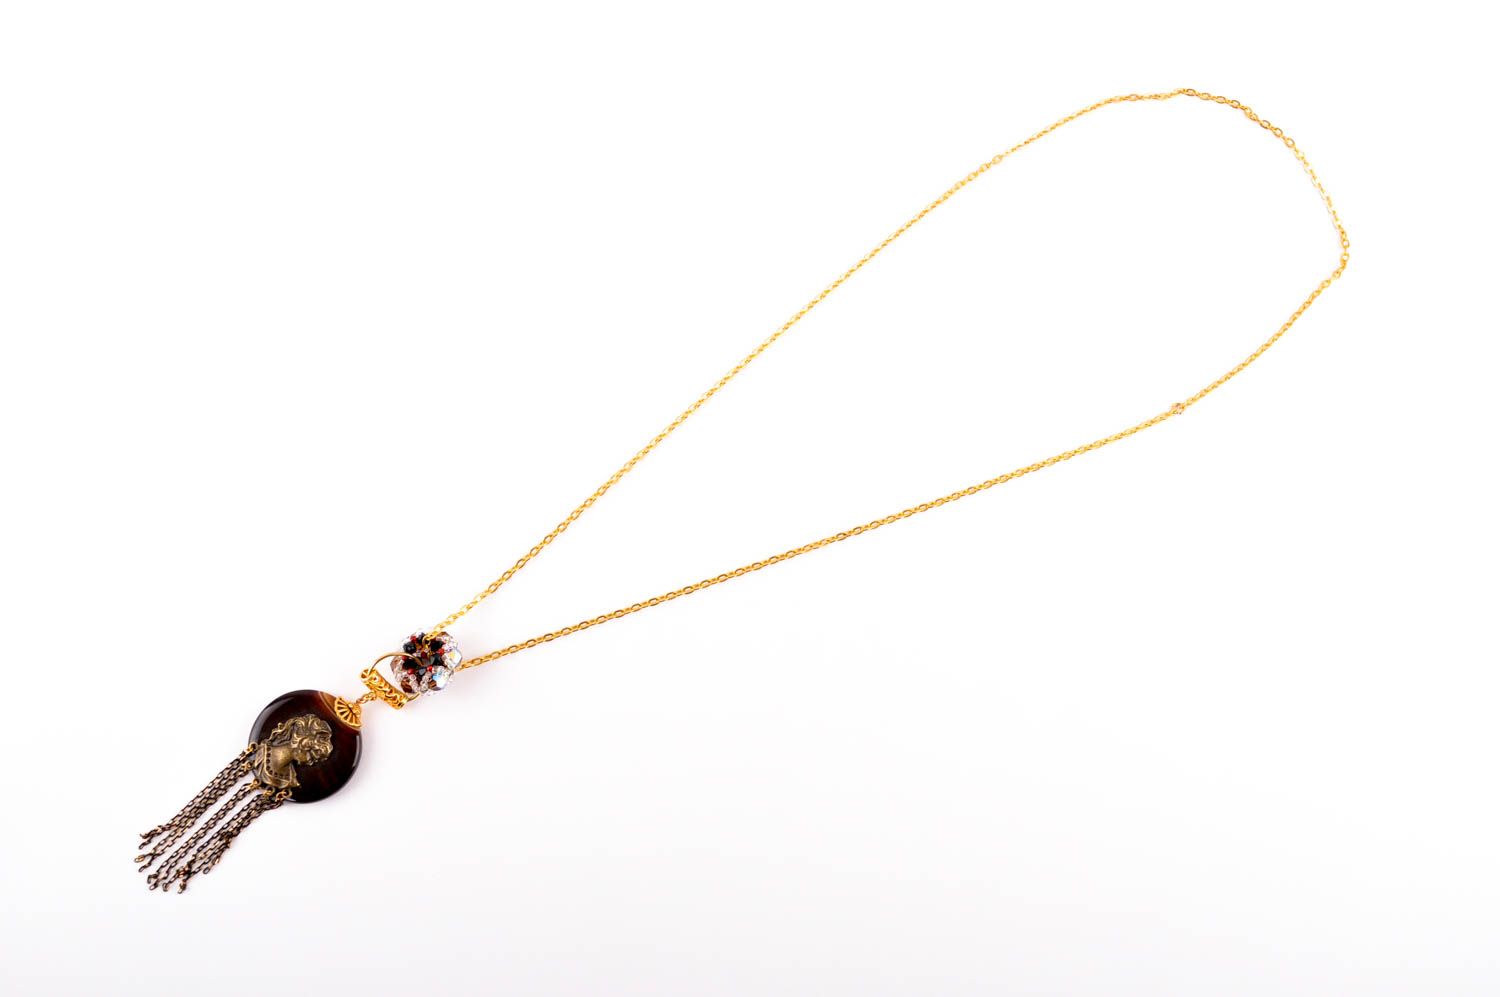 Handmade pendant designer accessory unusual gift ideas beads pendant for her photo 5